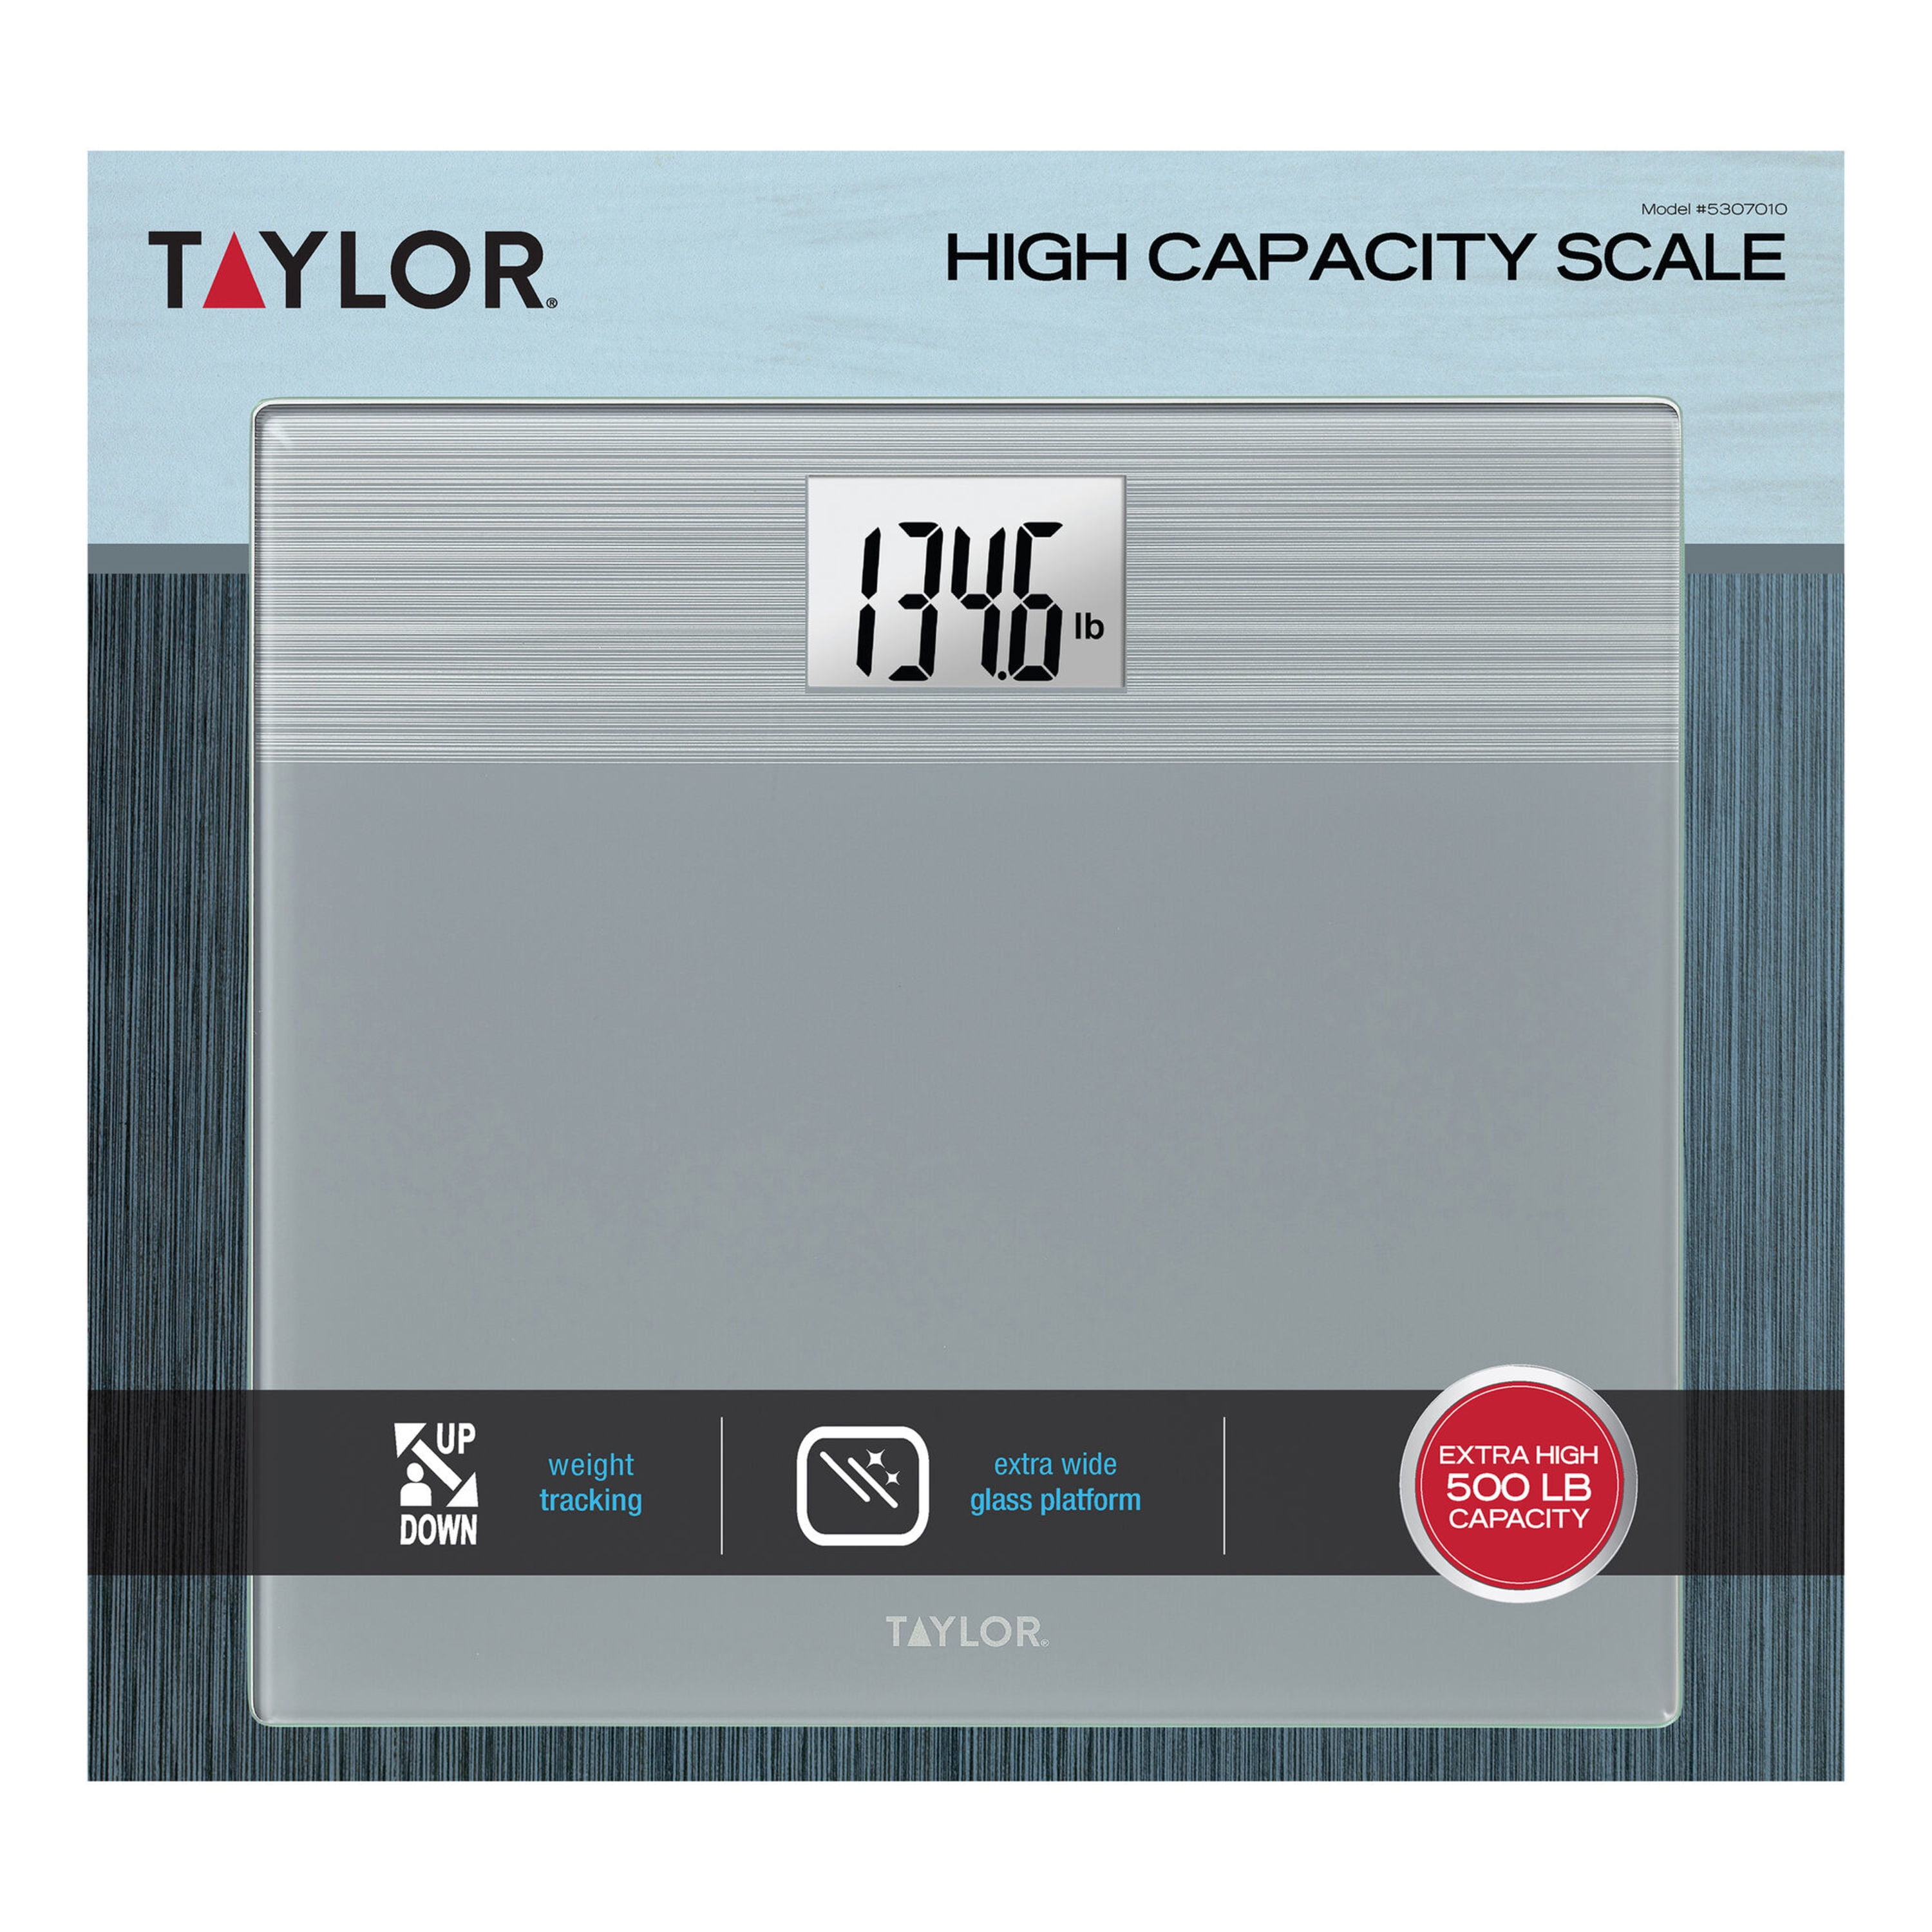 Taylor 1130 Large Platform Analog Bath Scale - Cole-Parmer